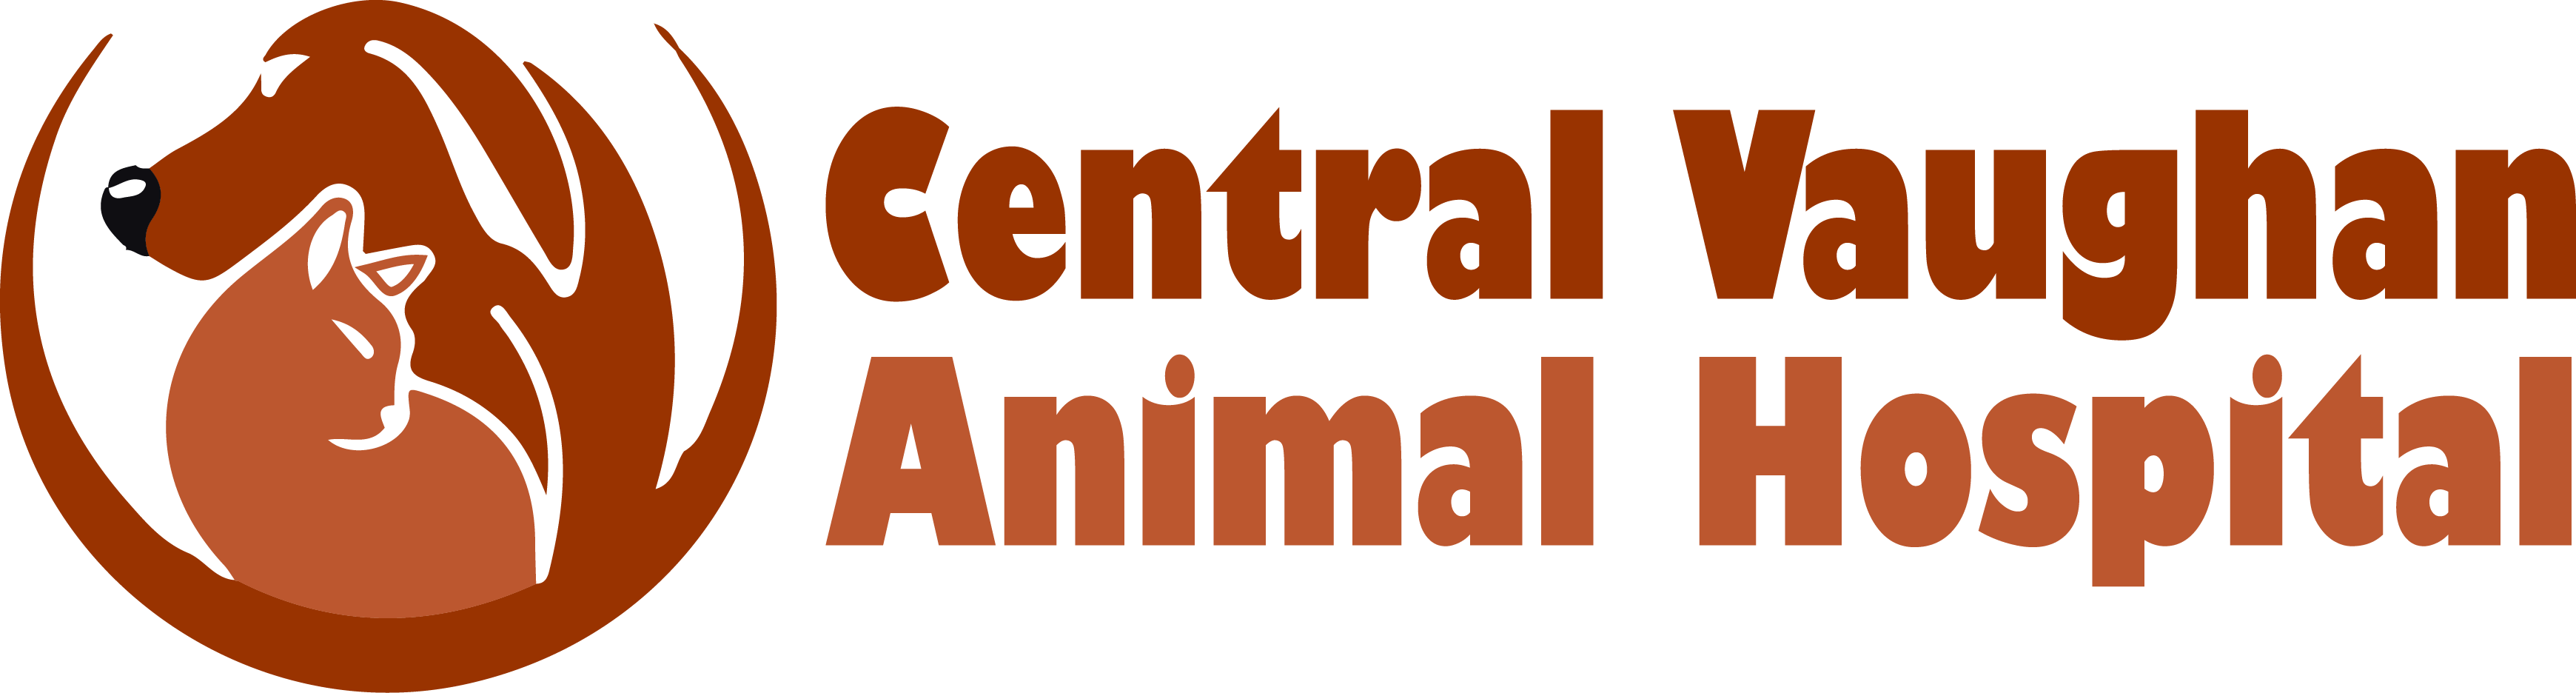 Central Vaughan Animal Hospital